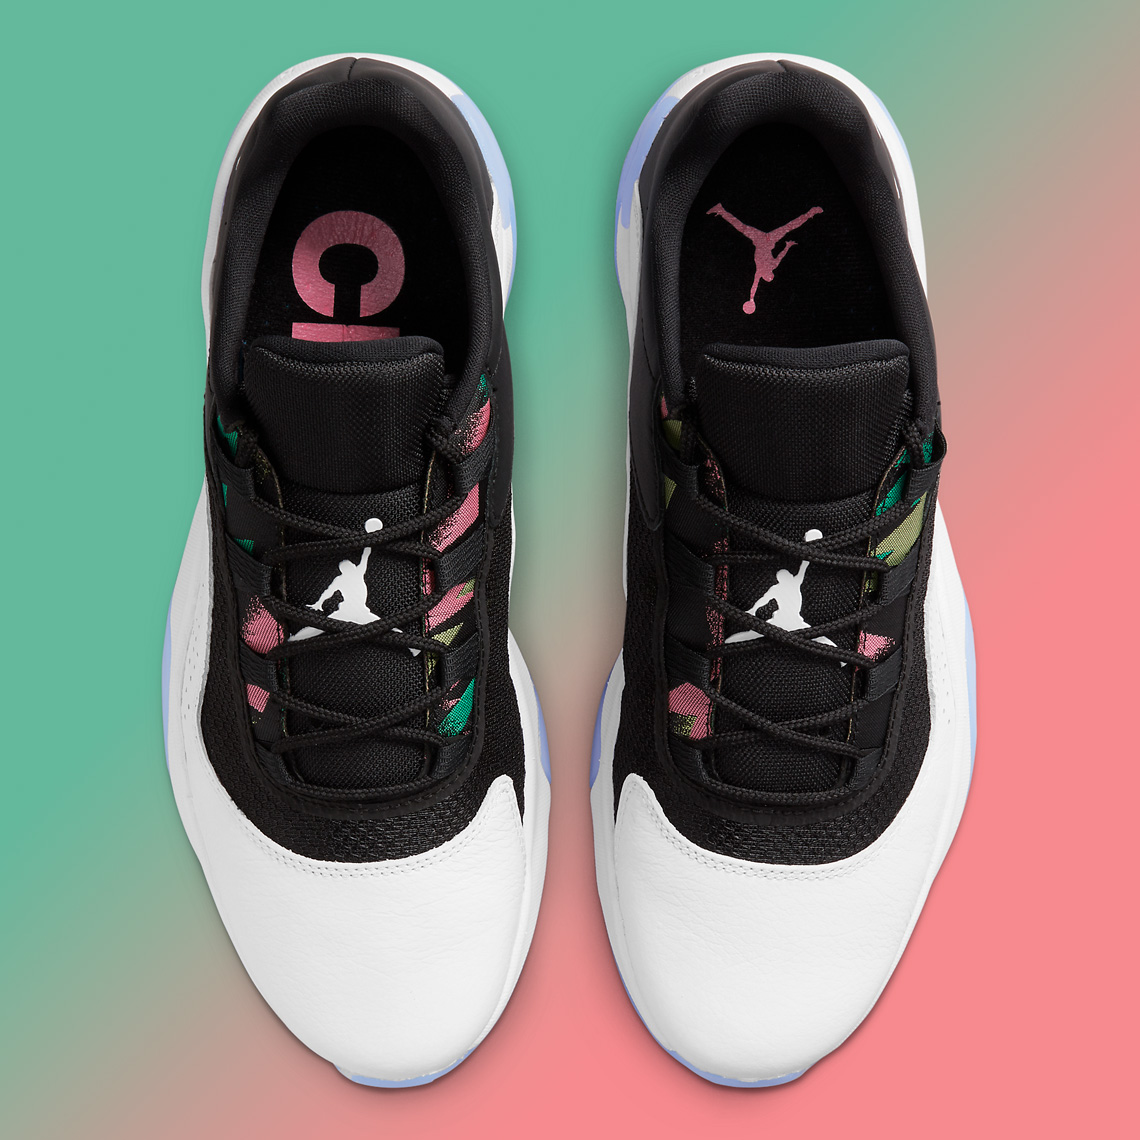 Air Jordan 11 Low CMFT White Black CW0784-104 | SneakerNews.com